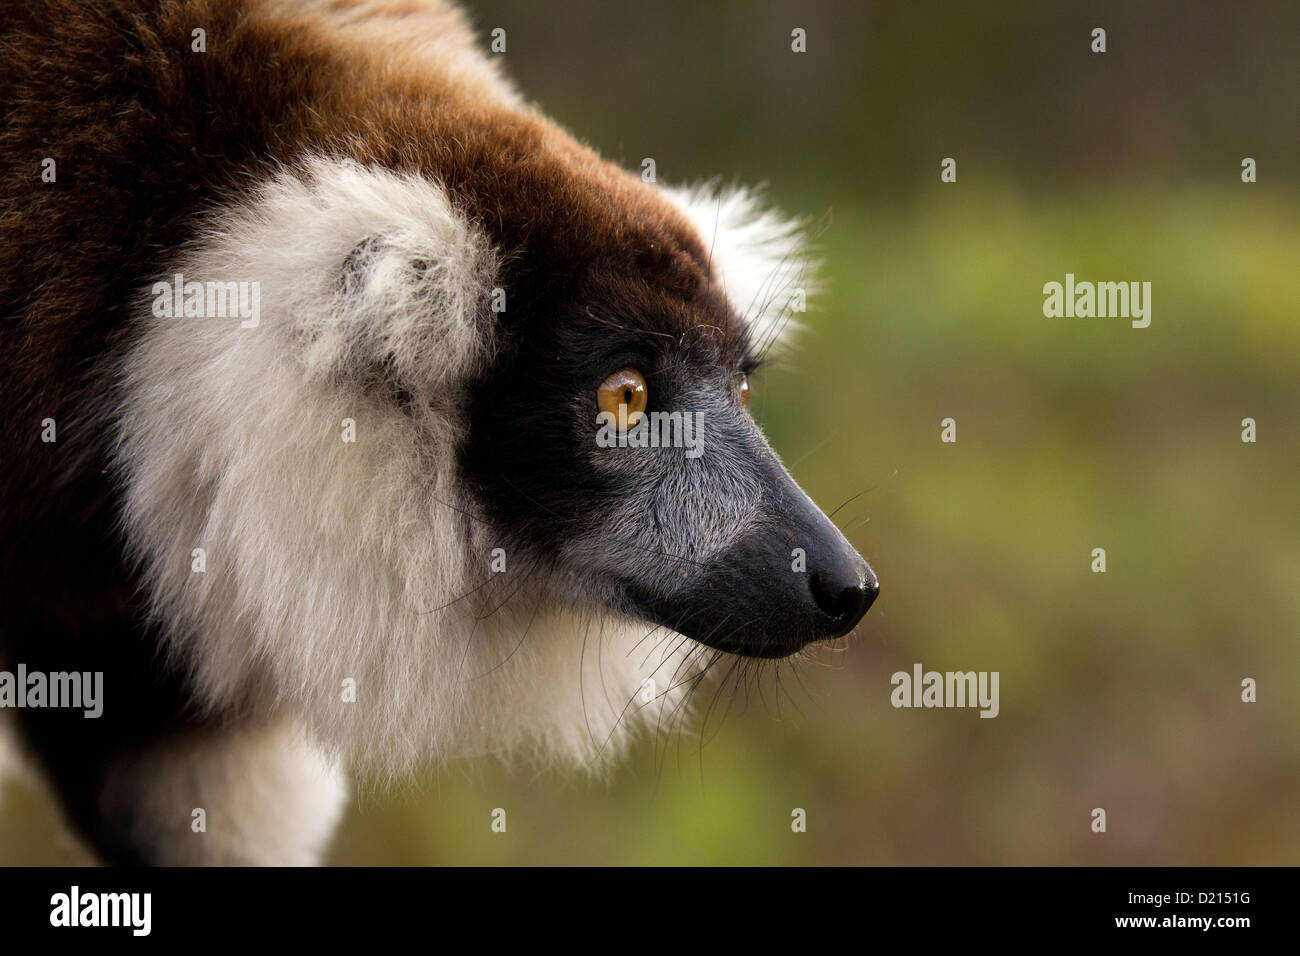 Black and white ruffed lemur, Varecia variegata portrait Stock Photo